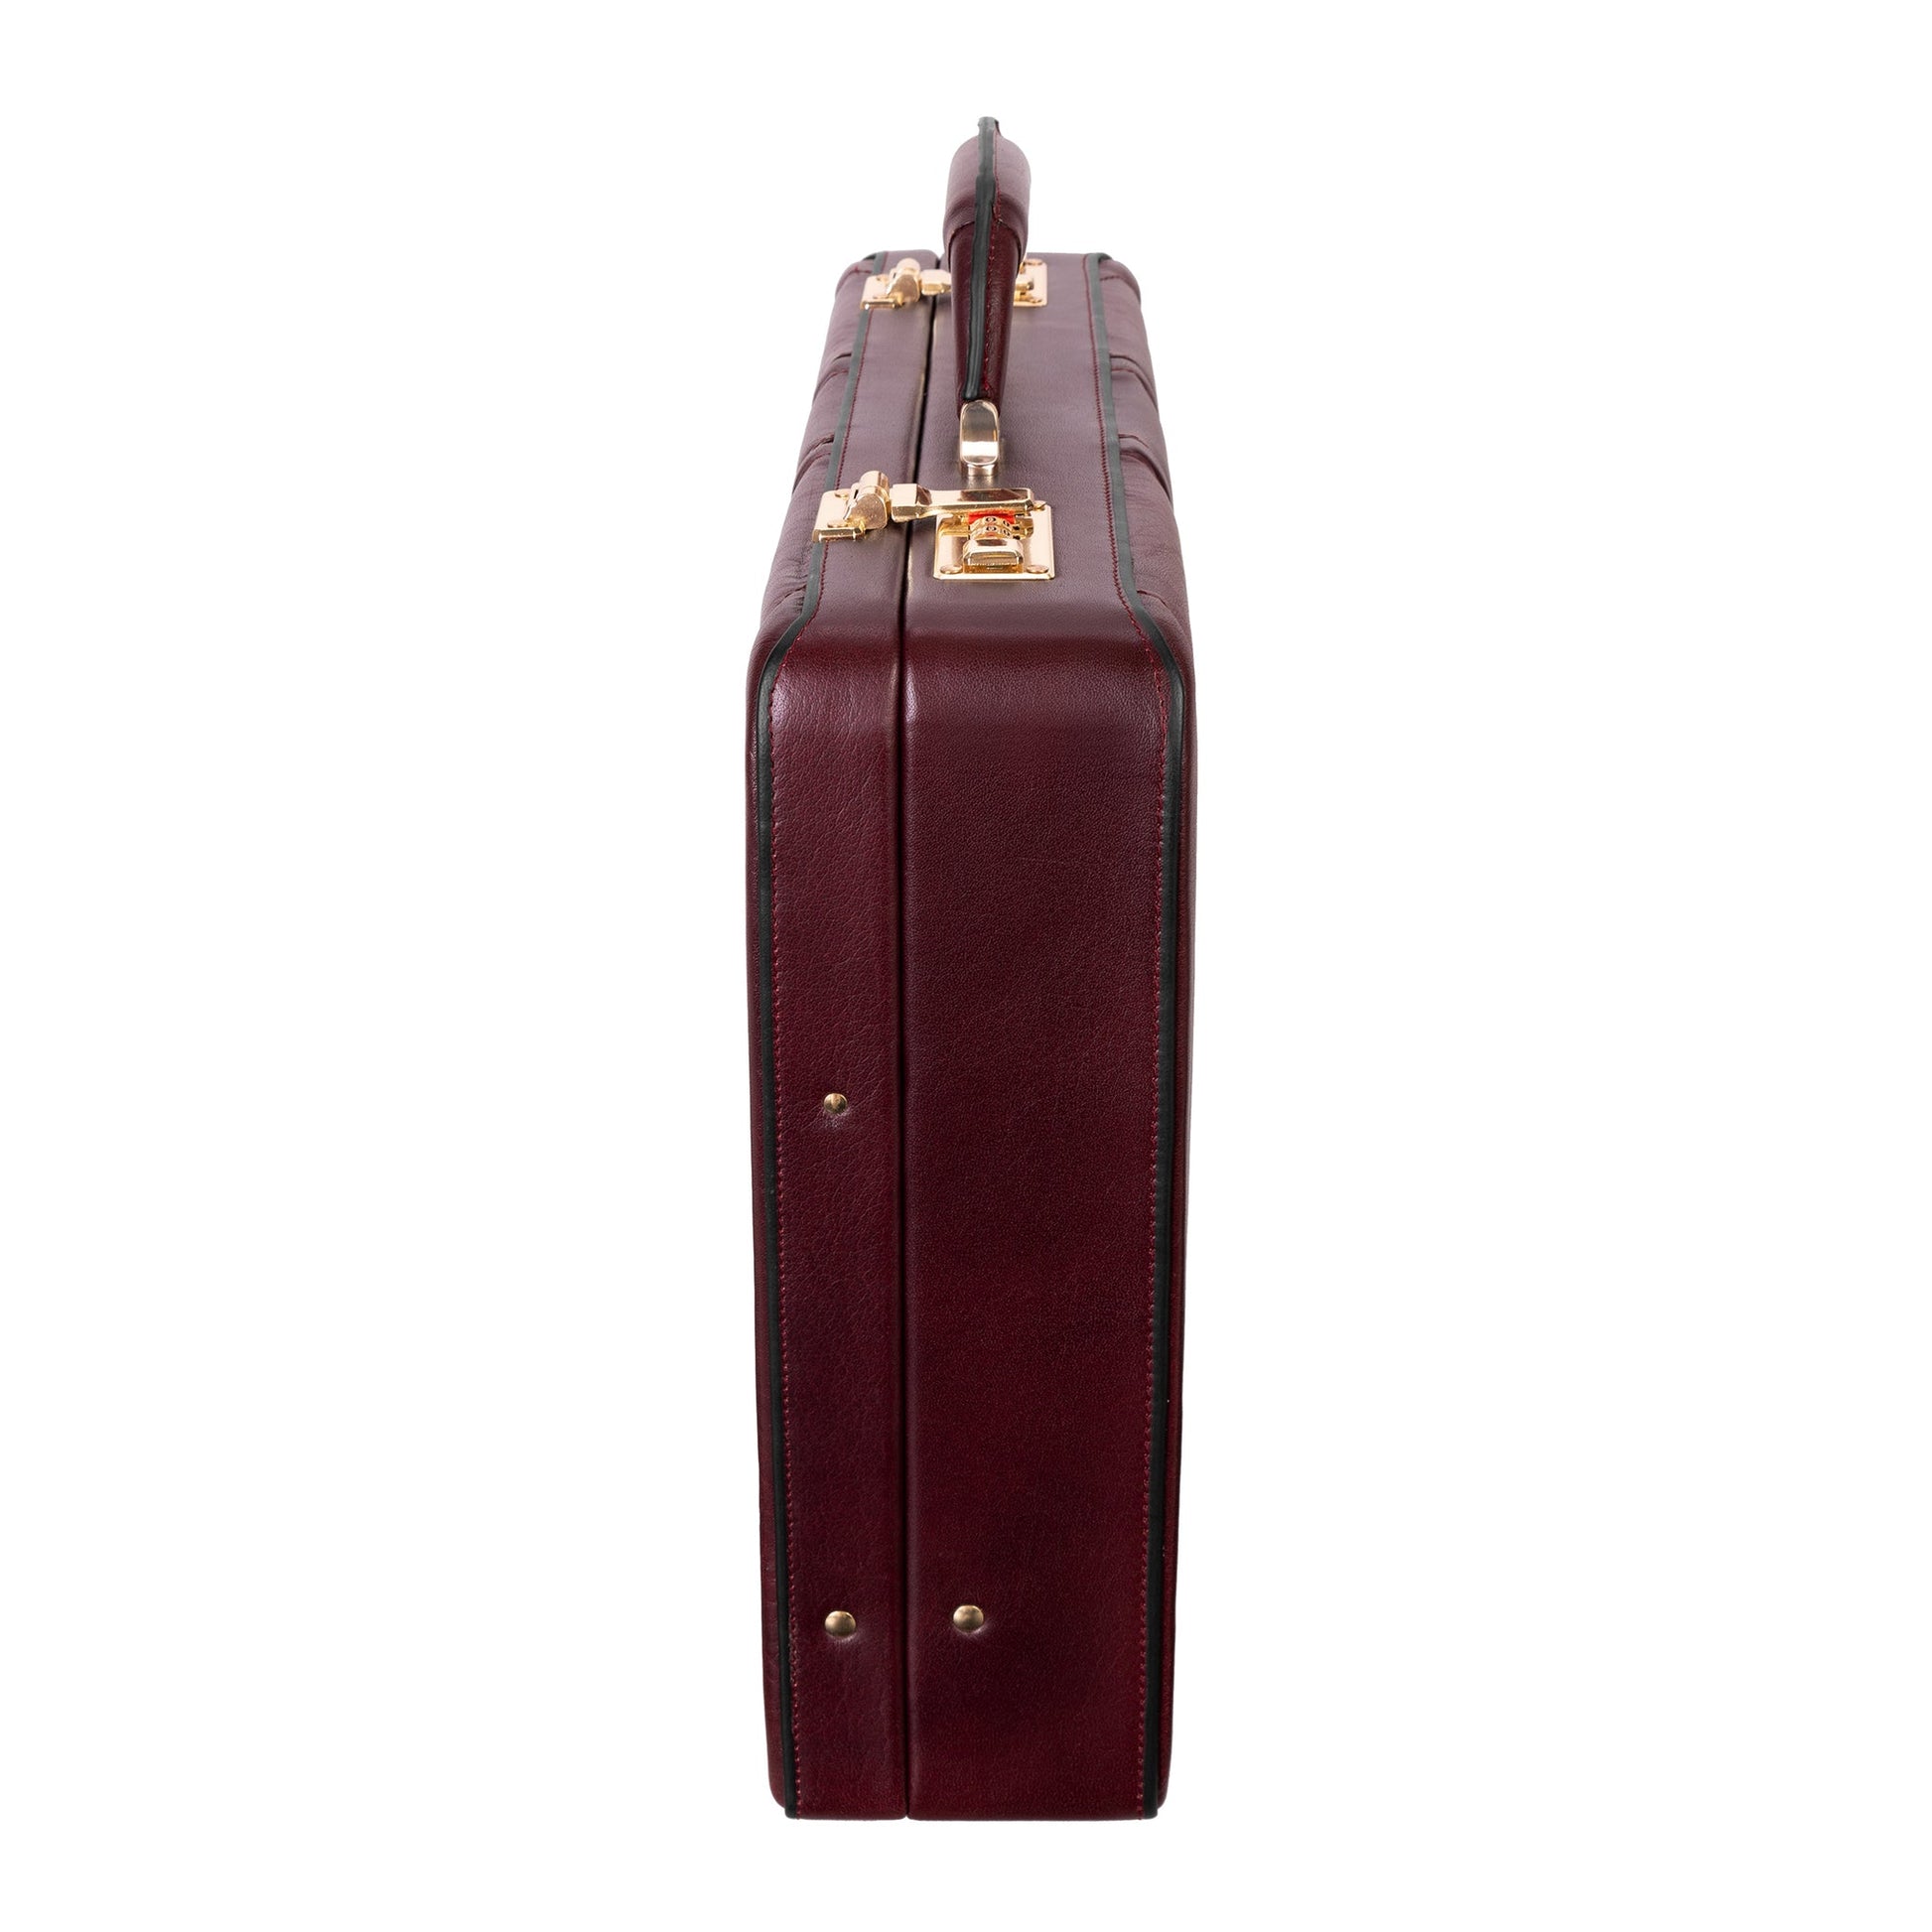 Cognac Leather Briefcase